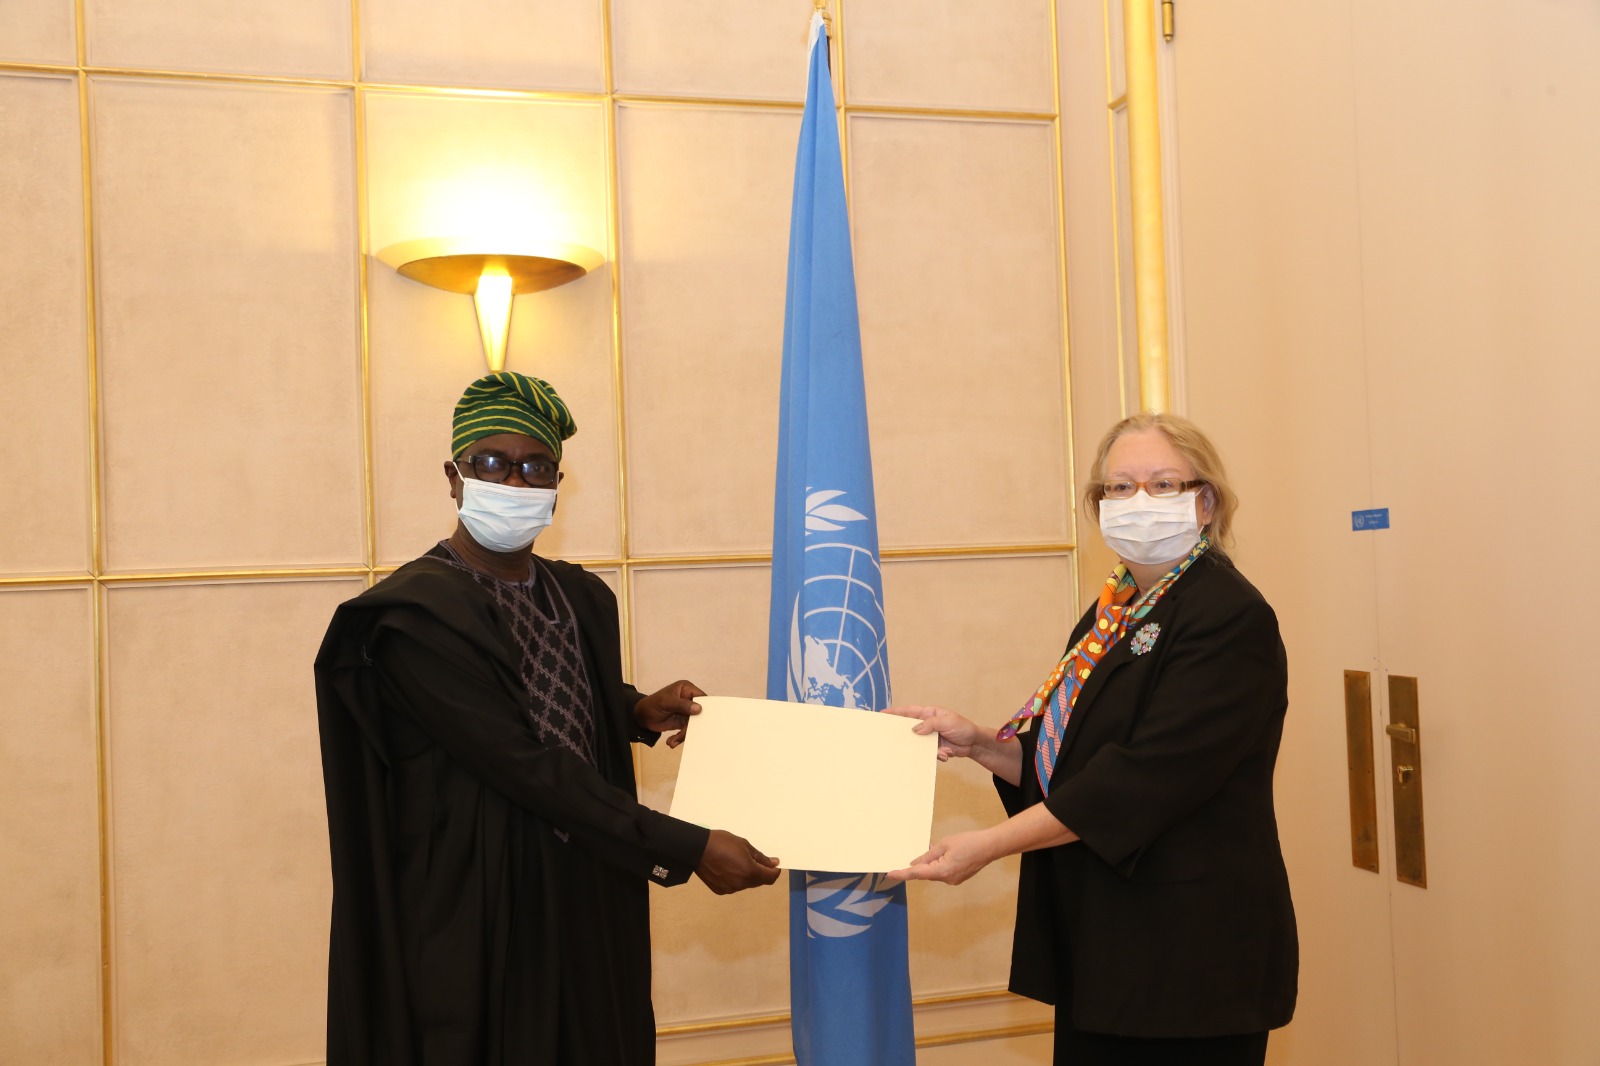 His Excellency, Ambassador Abiodun Richards Adejola and The D-G United Nations Geneva Mrs. Tatiana Valovaya